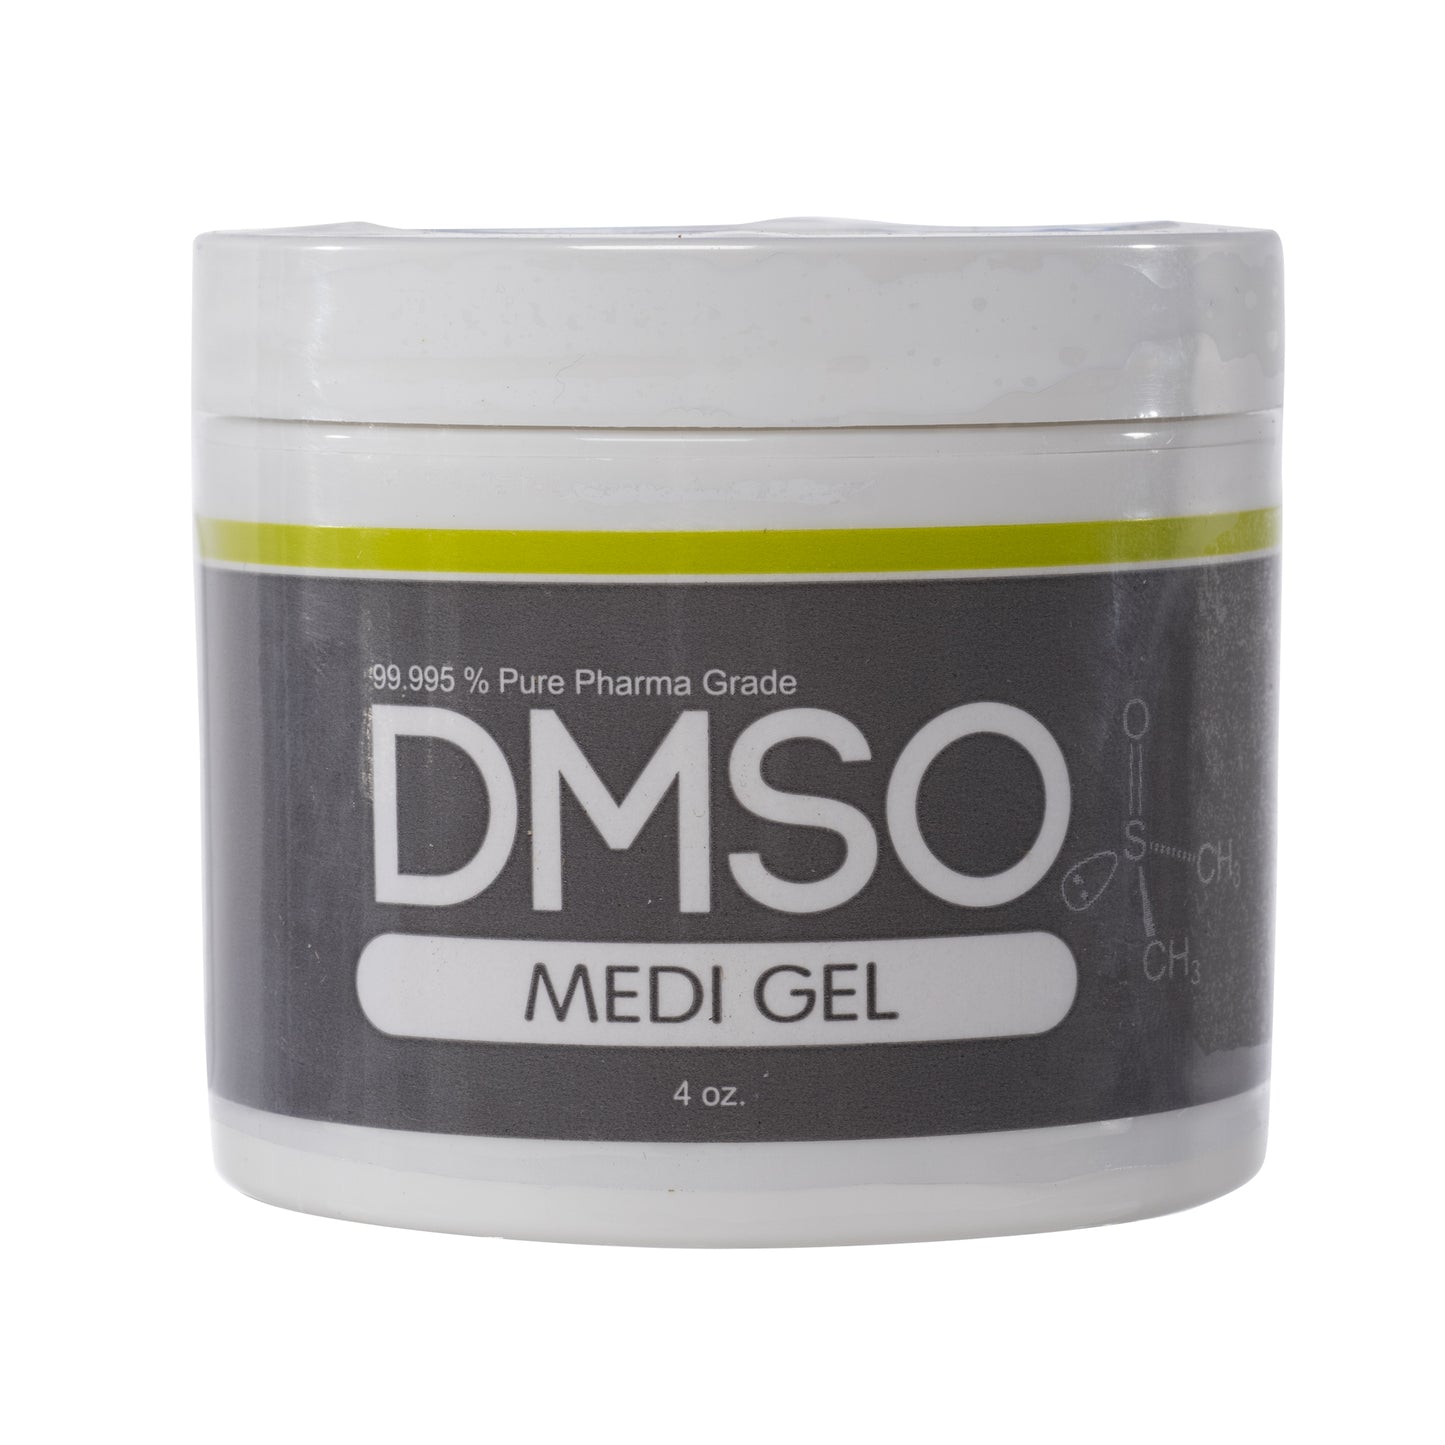 DMSO-gel-99.995-pure-dimethyl-sulfoxide-arthritis-pain-Sealed. White 4 oz jar with white twist on lid. Label reads 99.995% Pure pharma grade DMSO Medi Gel 4 oz